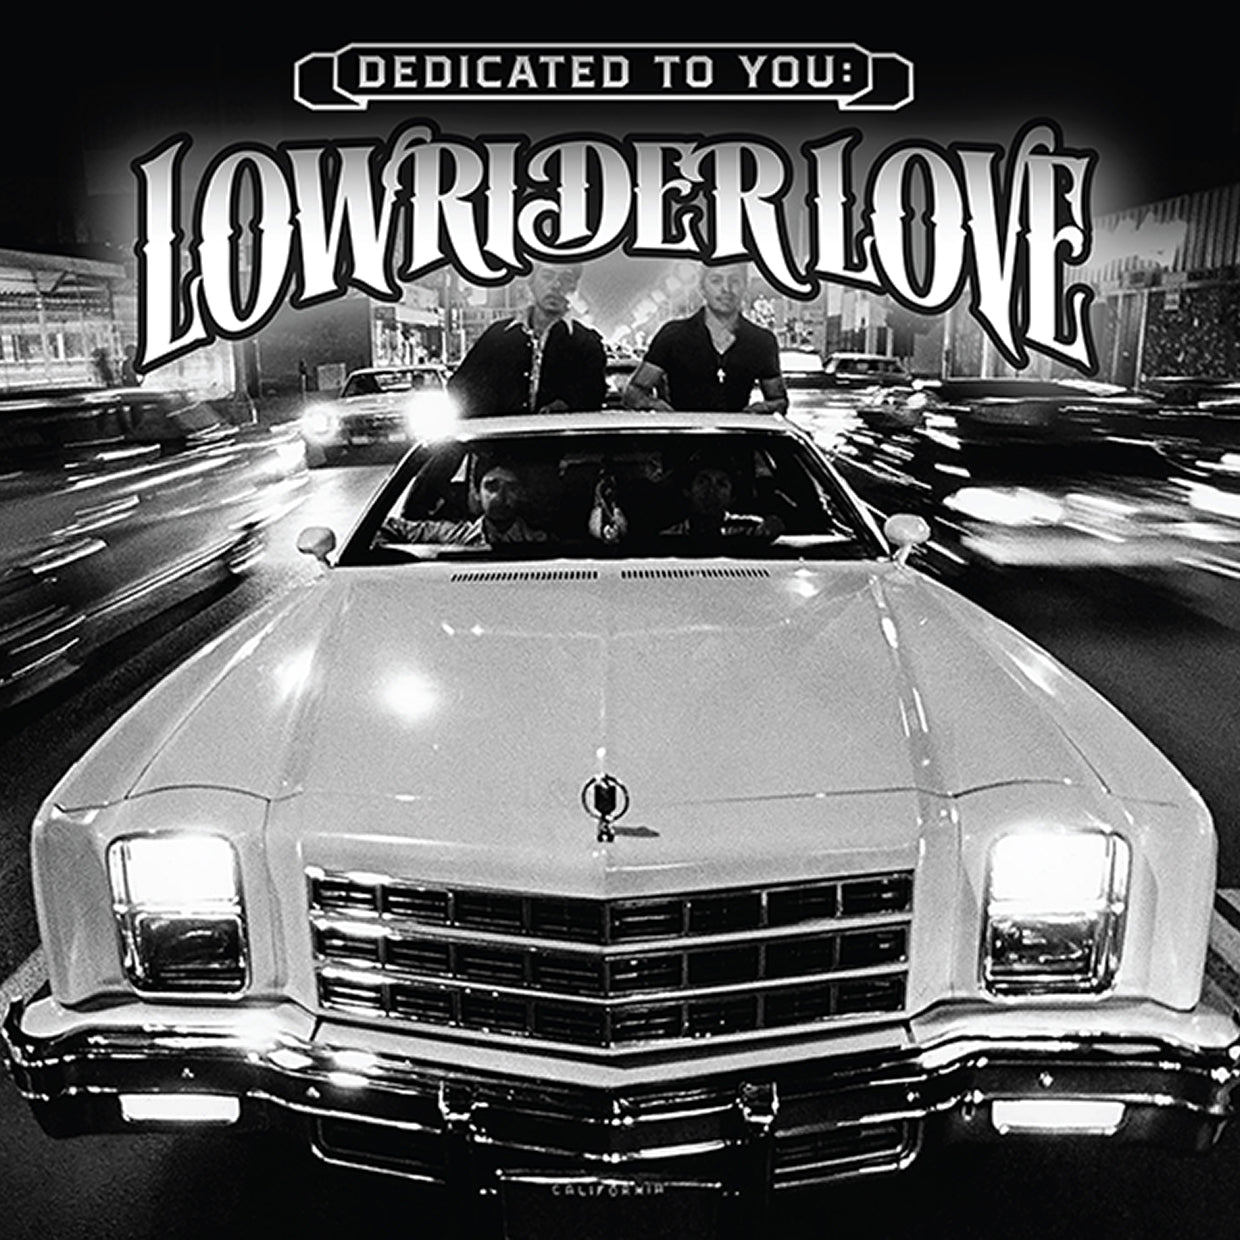 VARIOUS - Dedicated to You: Lowrider Love - LP - Clear & Smokin’ Black Vinyl [RSD2021-JUN12]